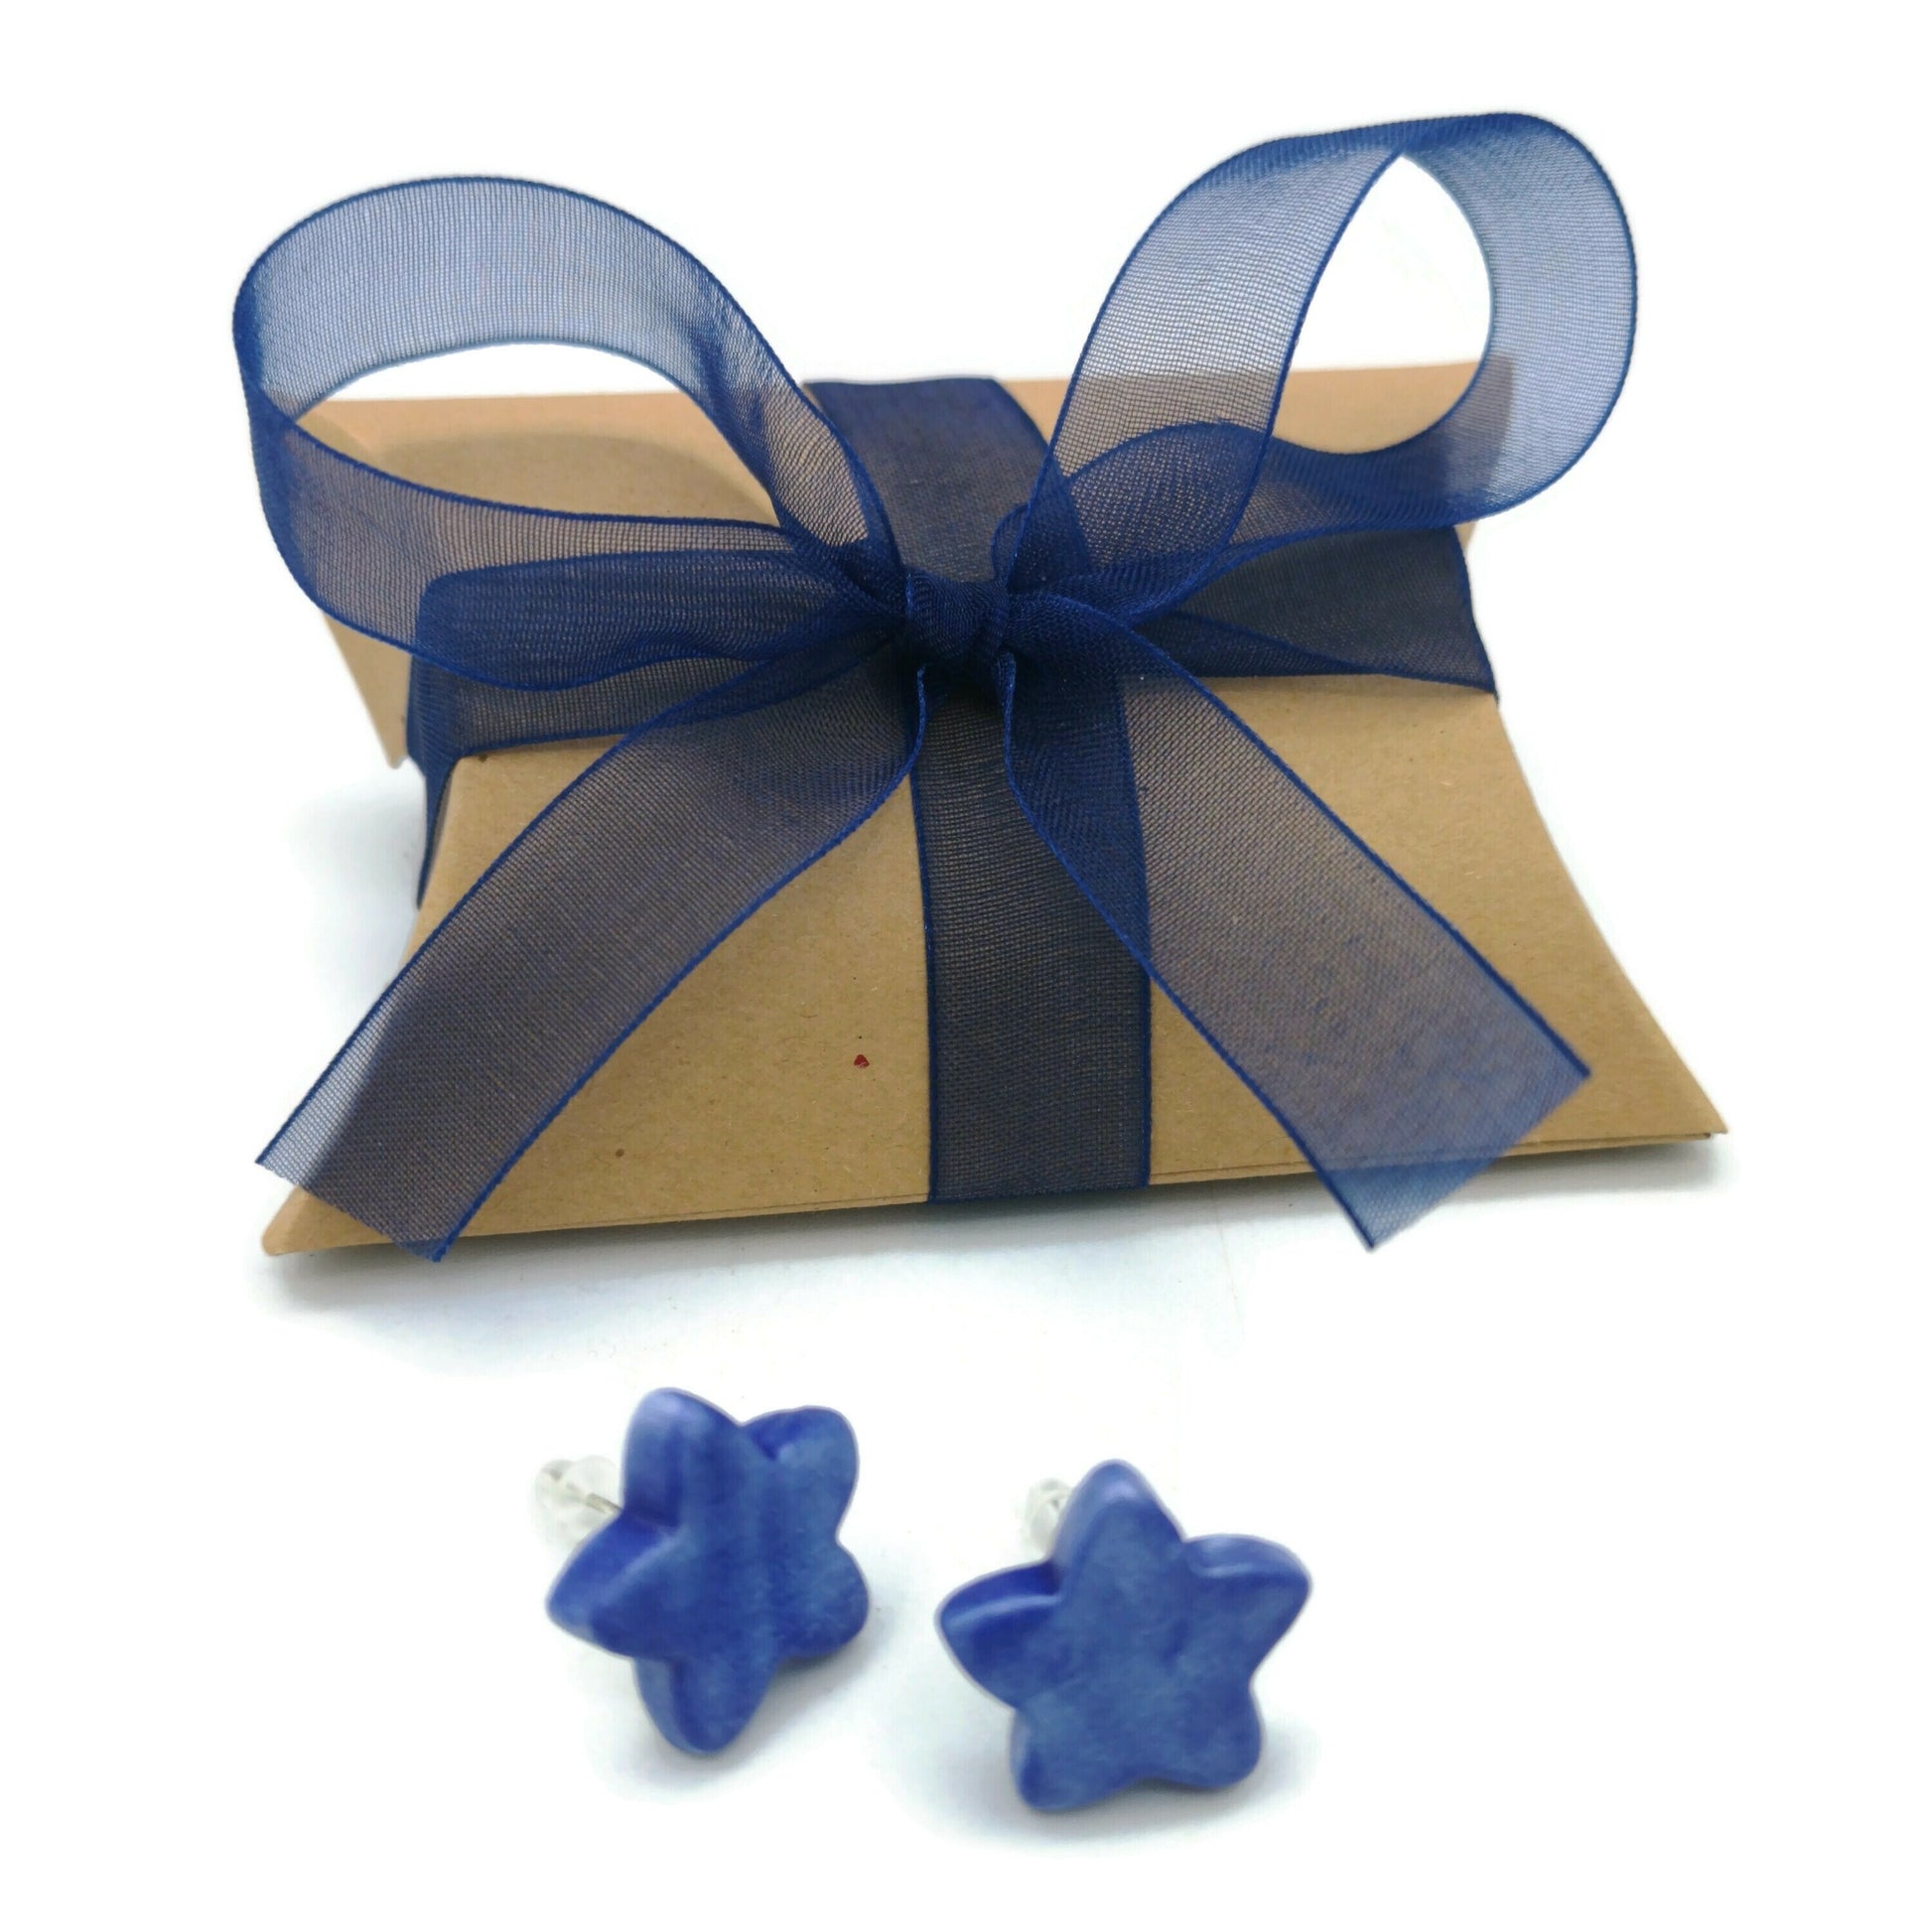 Blue Star Stud Earrings For Women, Handmade Ceramic Jewelry, Novelty Best Gifts for Her, mom birthday gift - Ceramica Ana Rafael